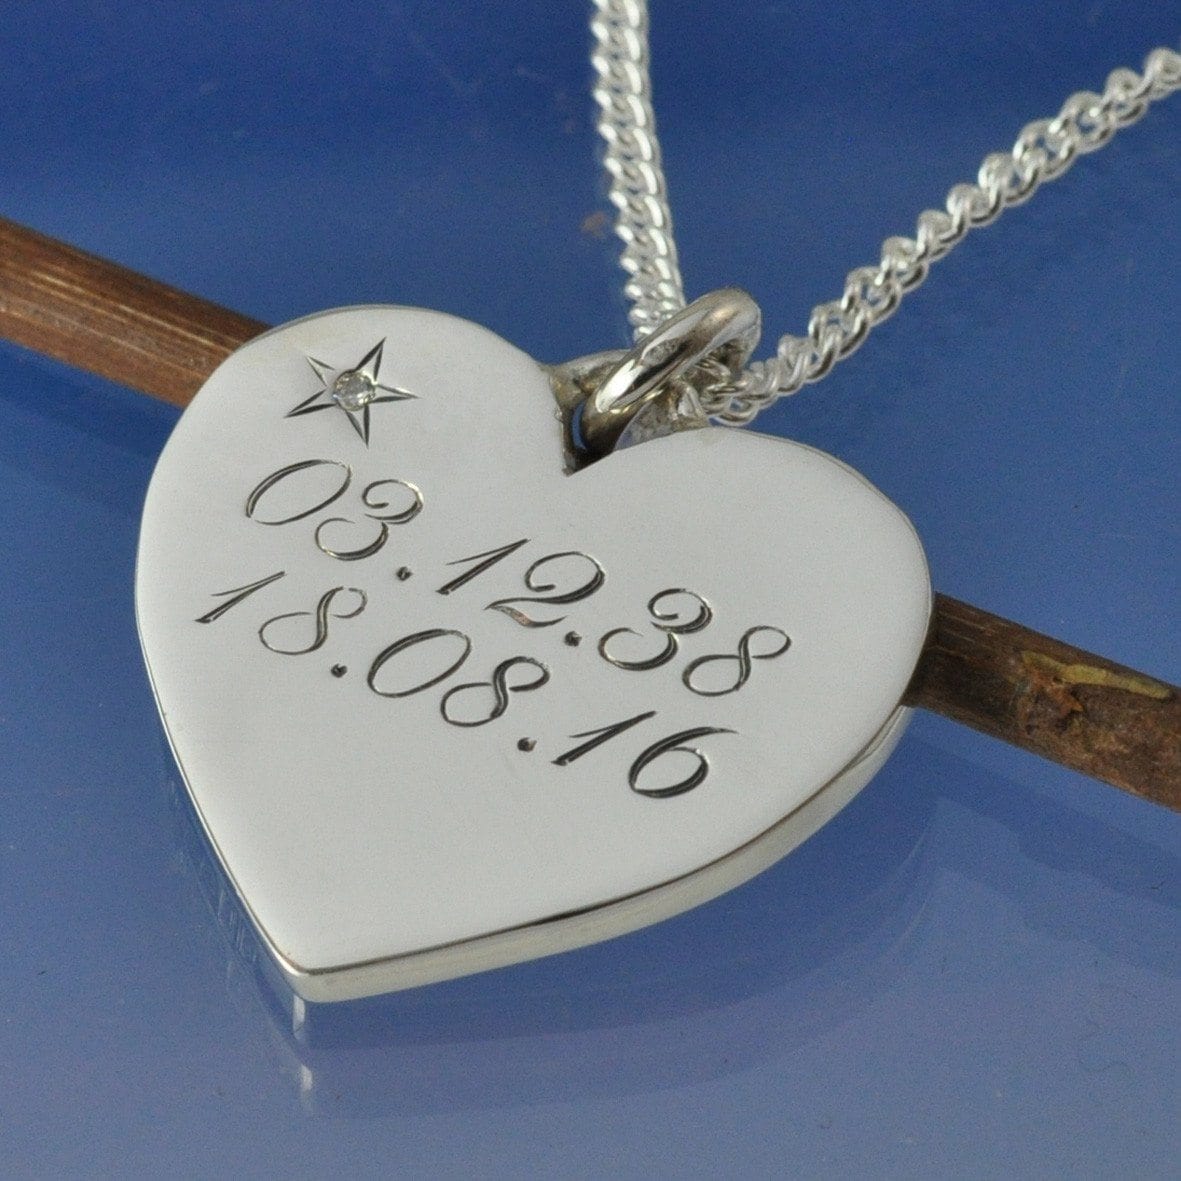 Cremation Ash Necklace - Diamond Heart Pendant by Chris Parry Jewellery